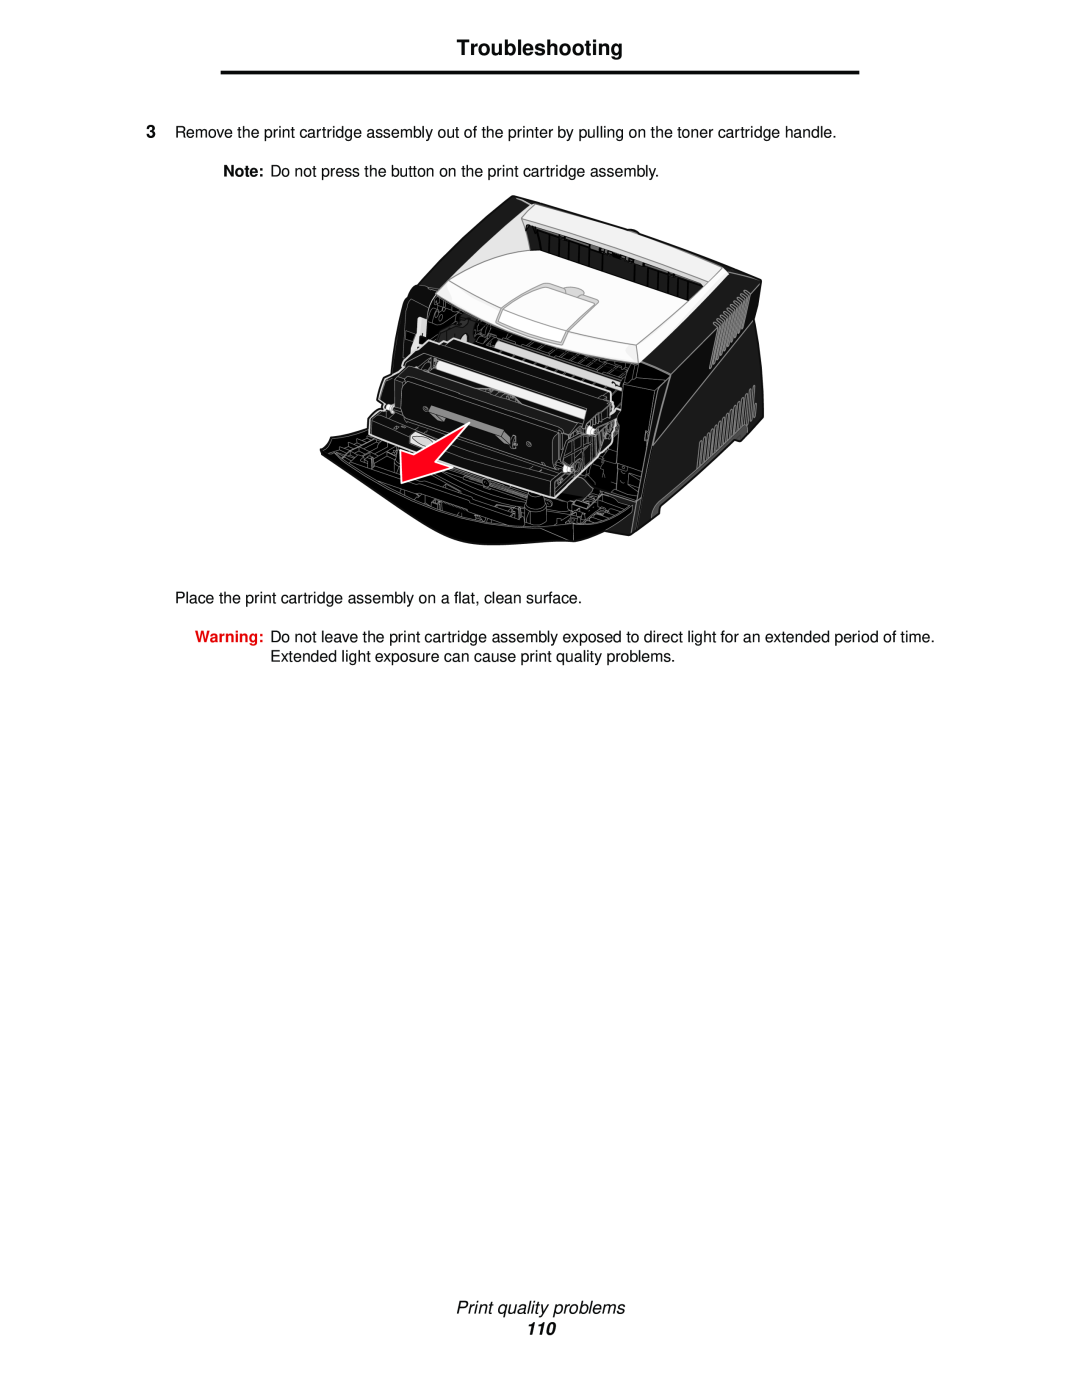 Lexmark 342n, 340 manual Troubleshooting, Print quality problems 